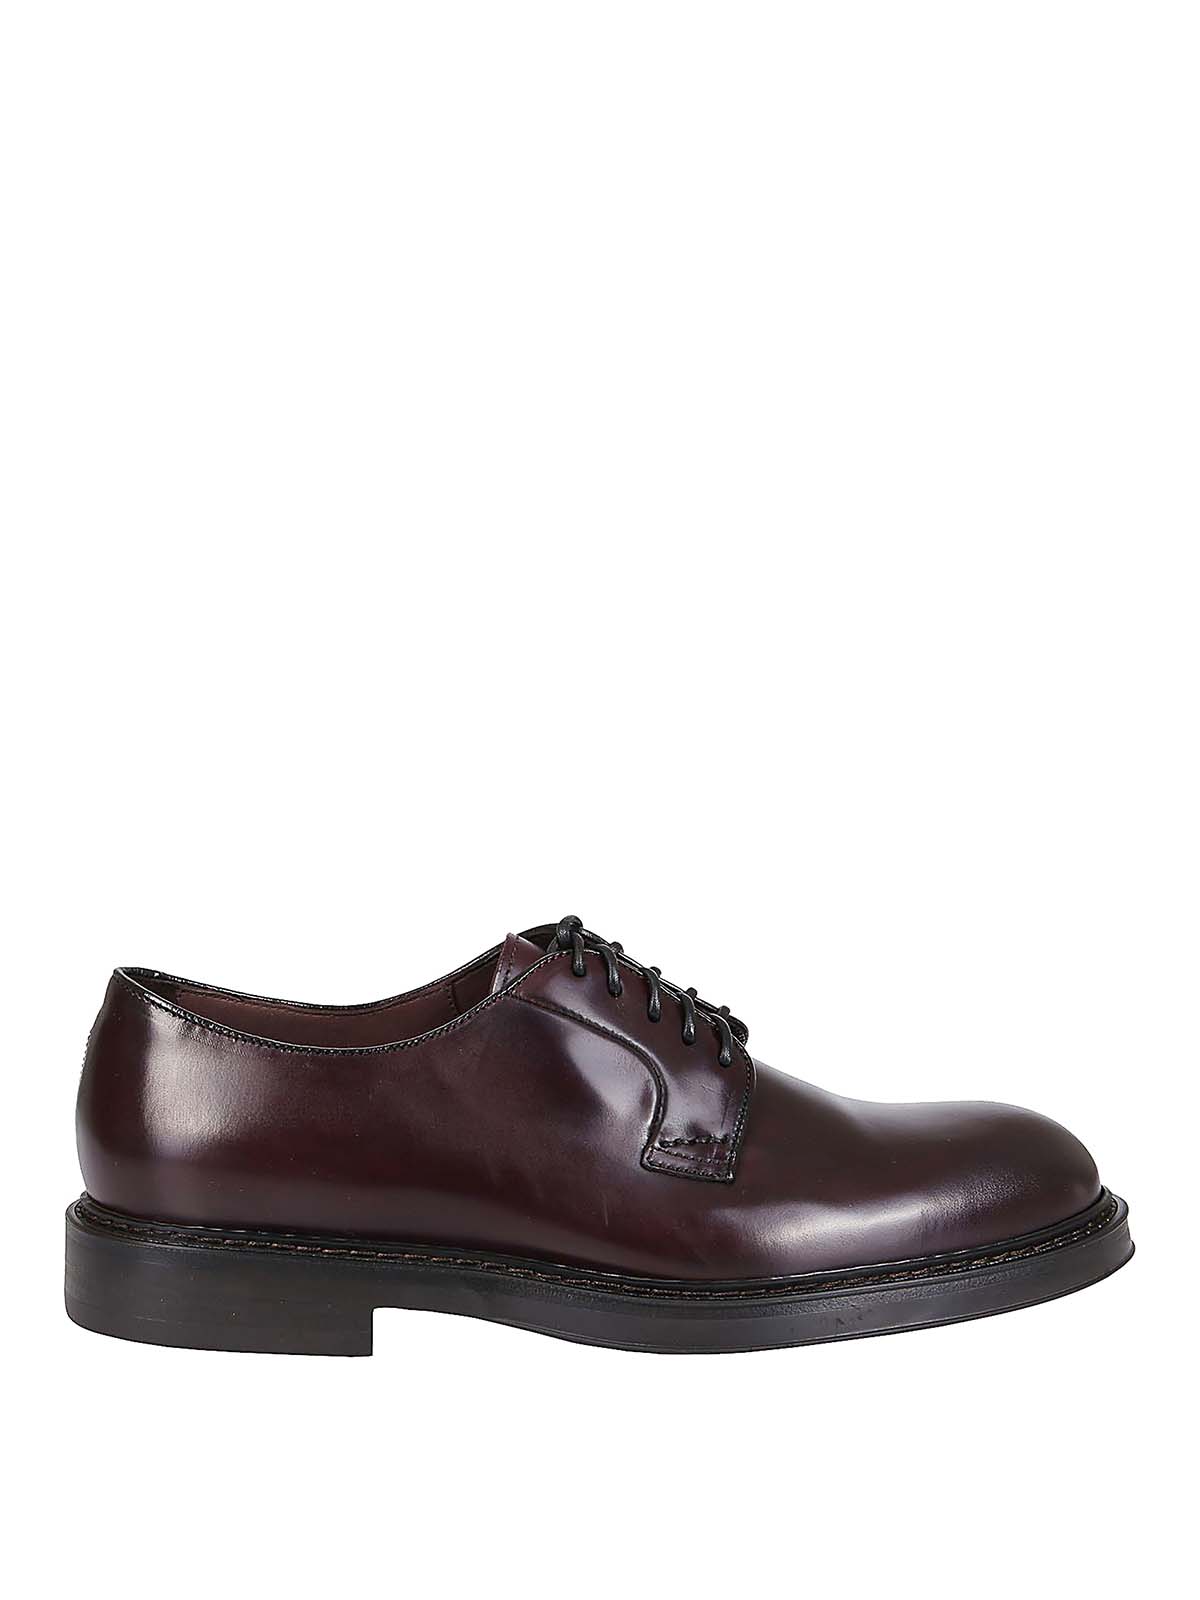 Lace-ups shoes Doucal's - Rubber sole leather Derby shoes - 1385BRUGESL04